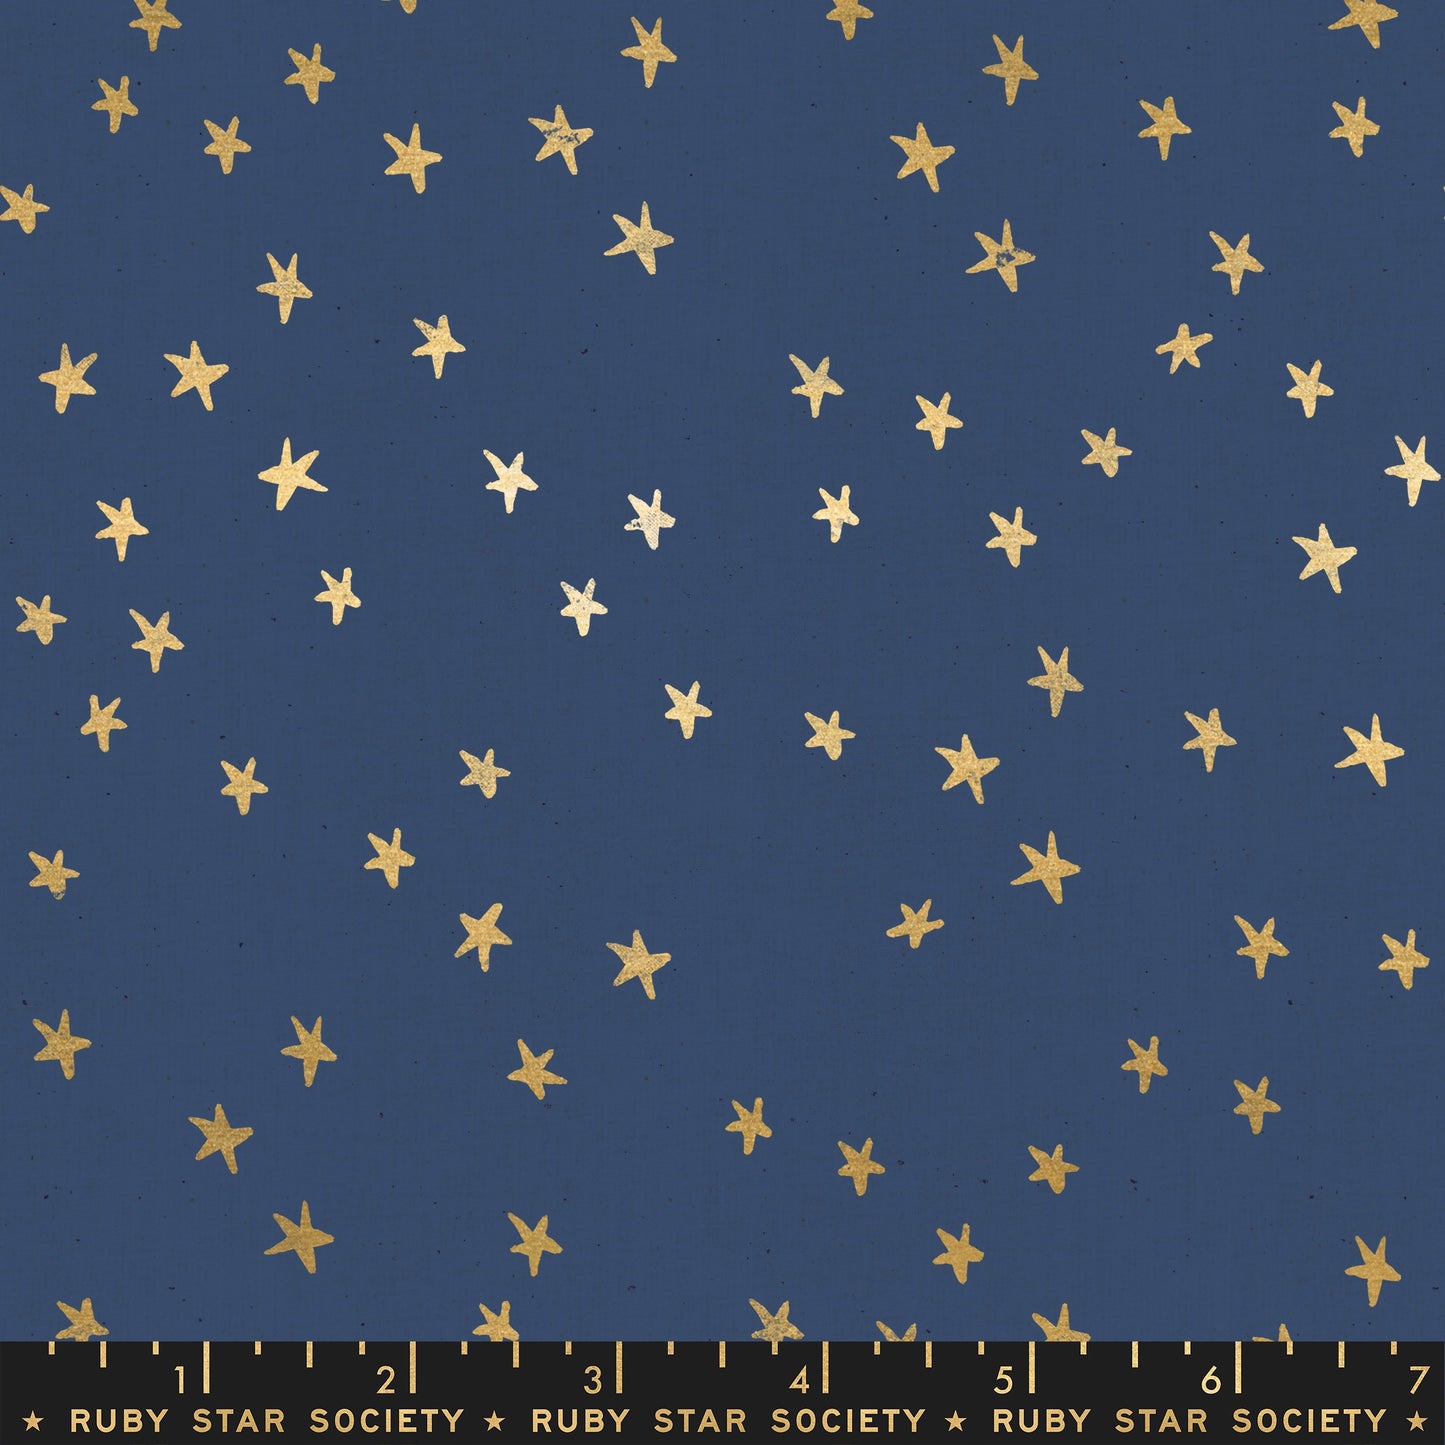 starry bluebell gold metallic starryruby star society fabric moda rs4006 26m Fabric Fetish